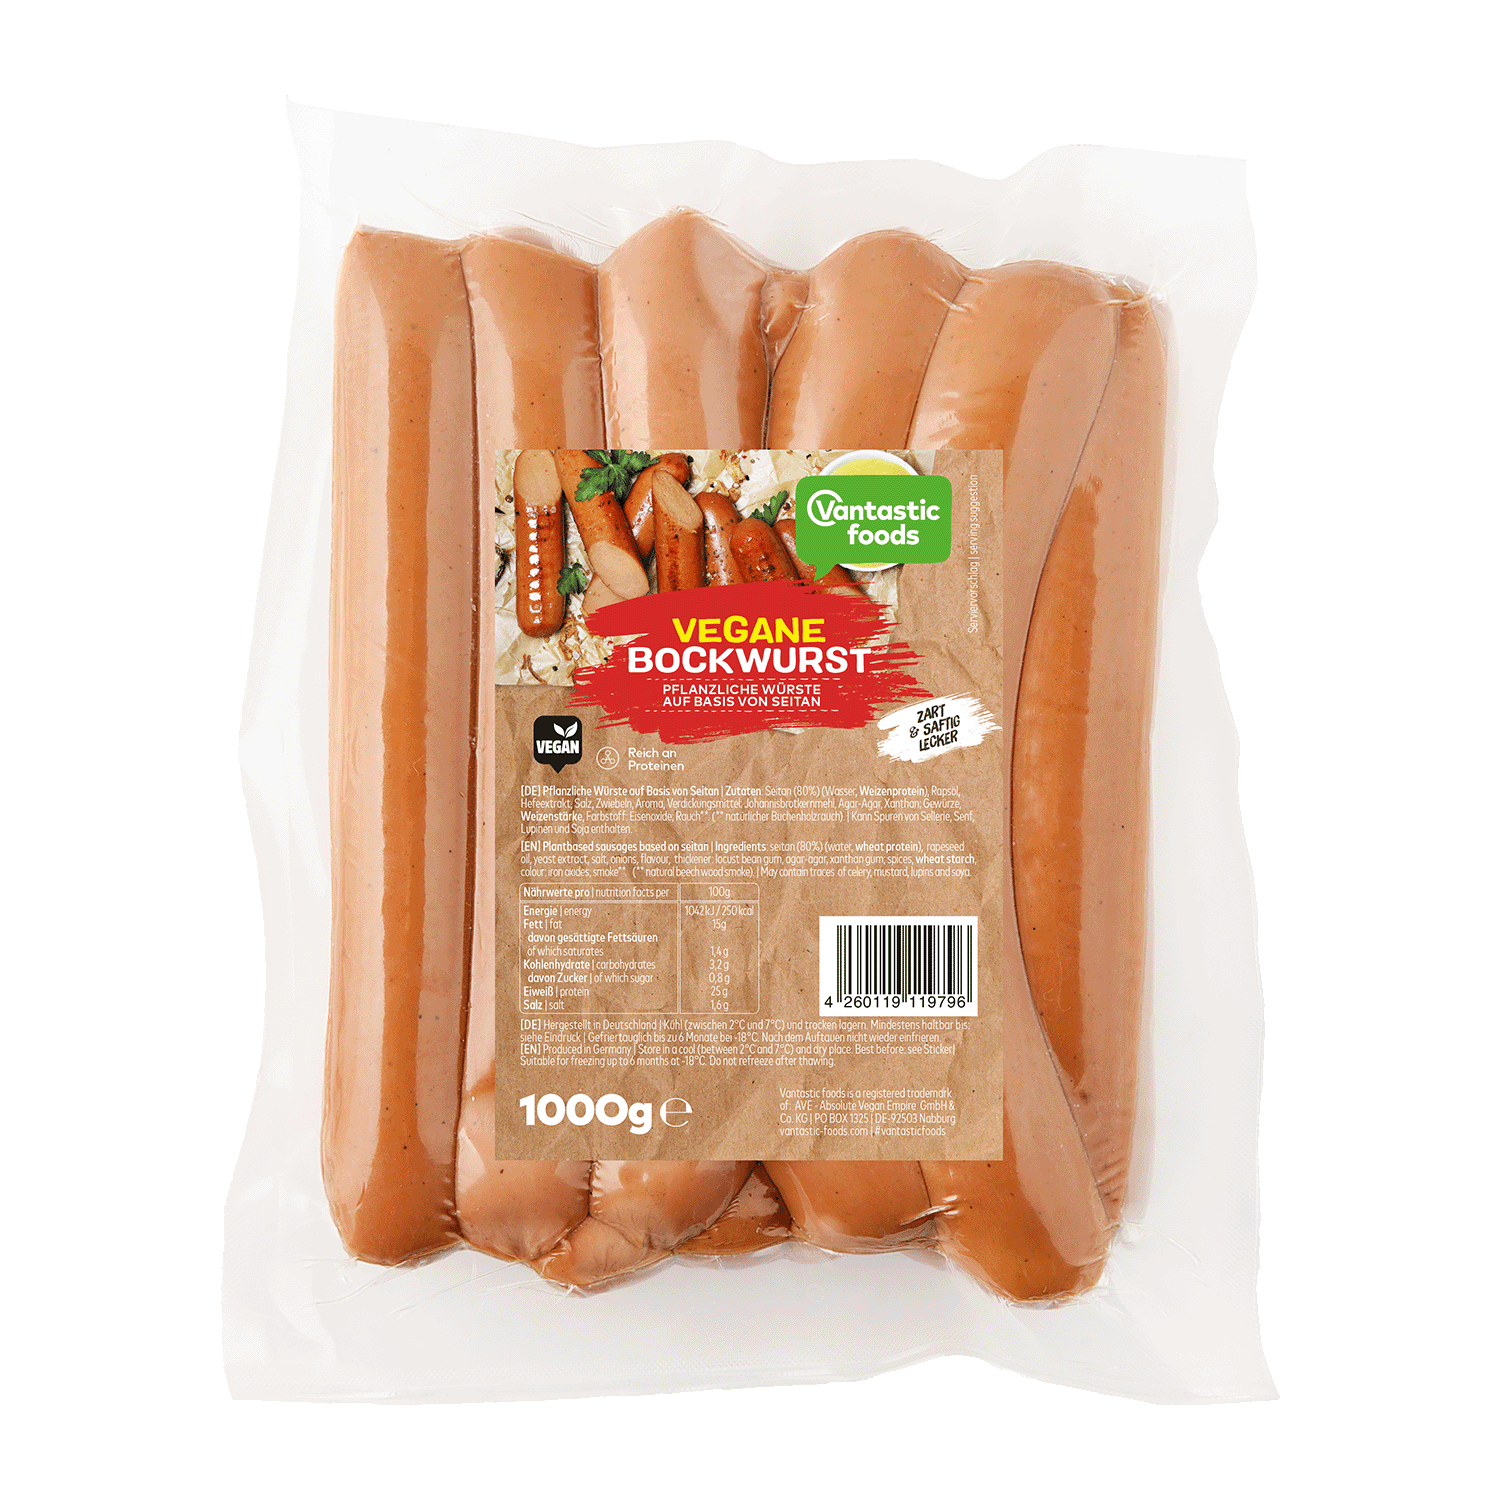 Vegan Bockwurst Big Pack, 1kg